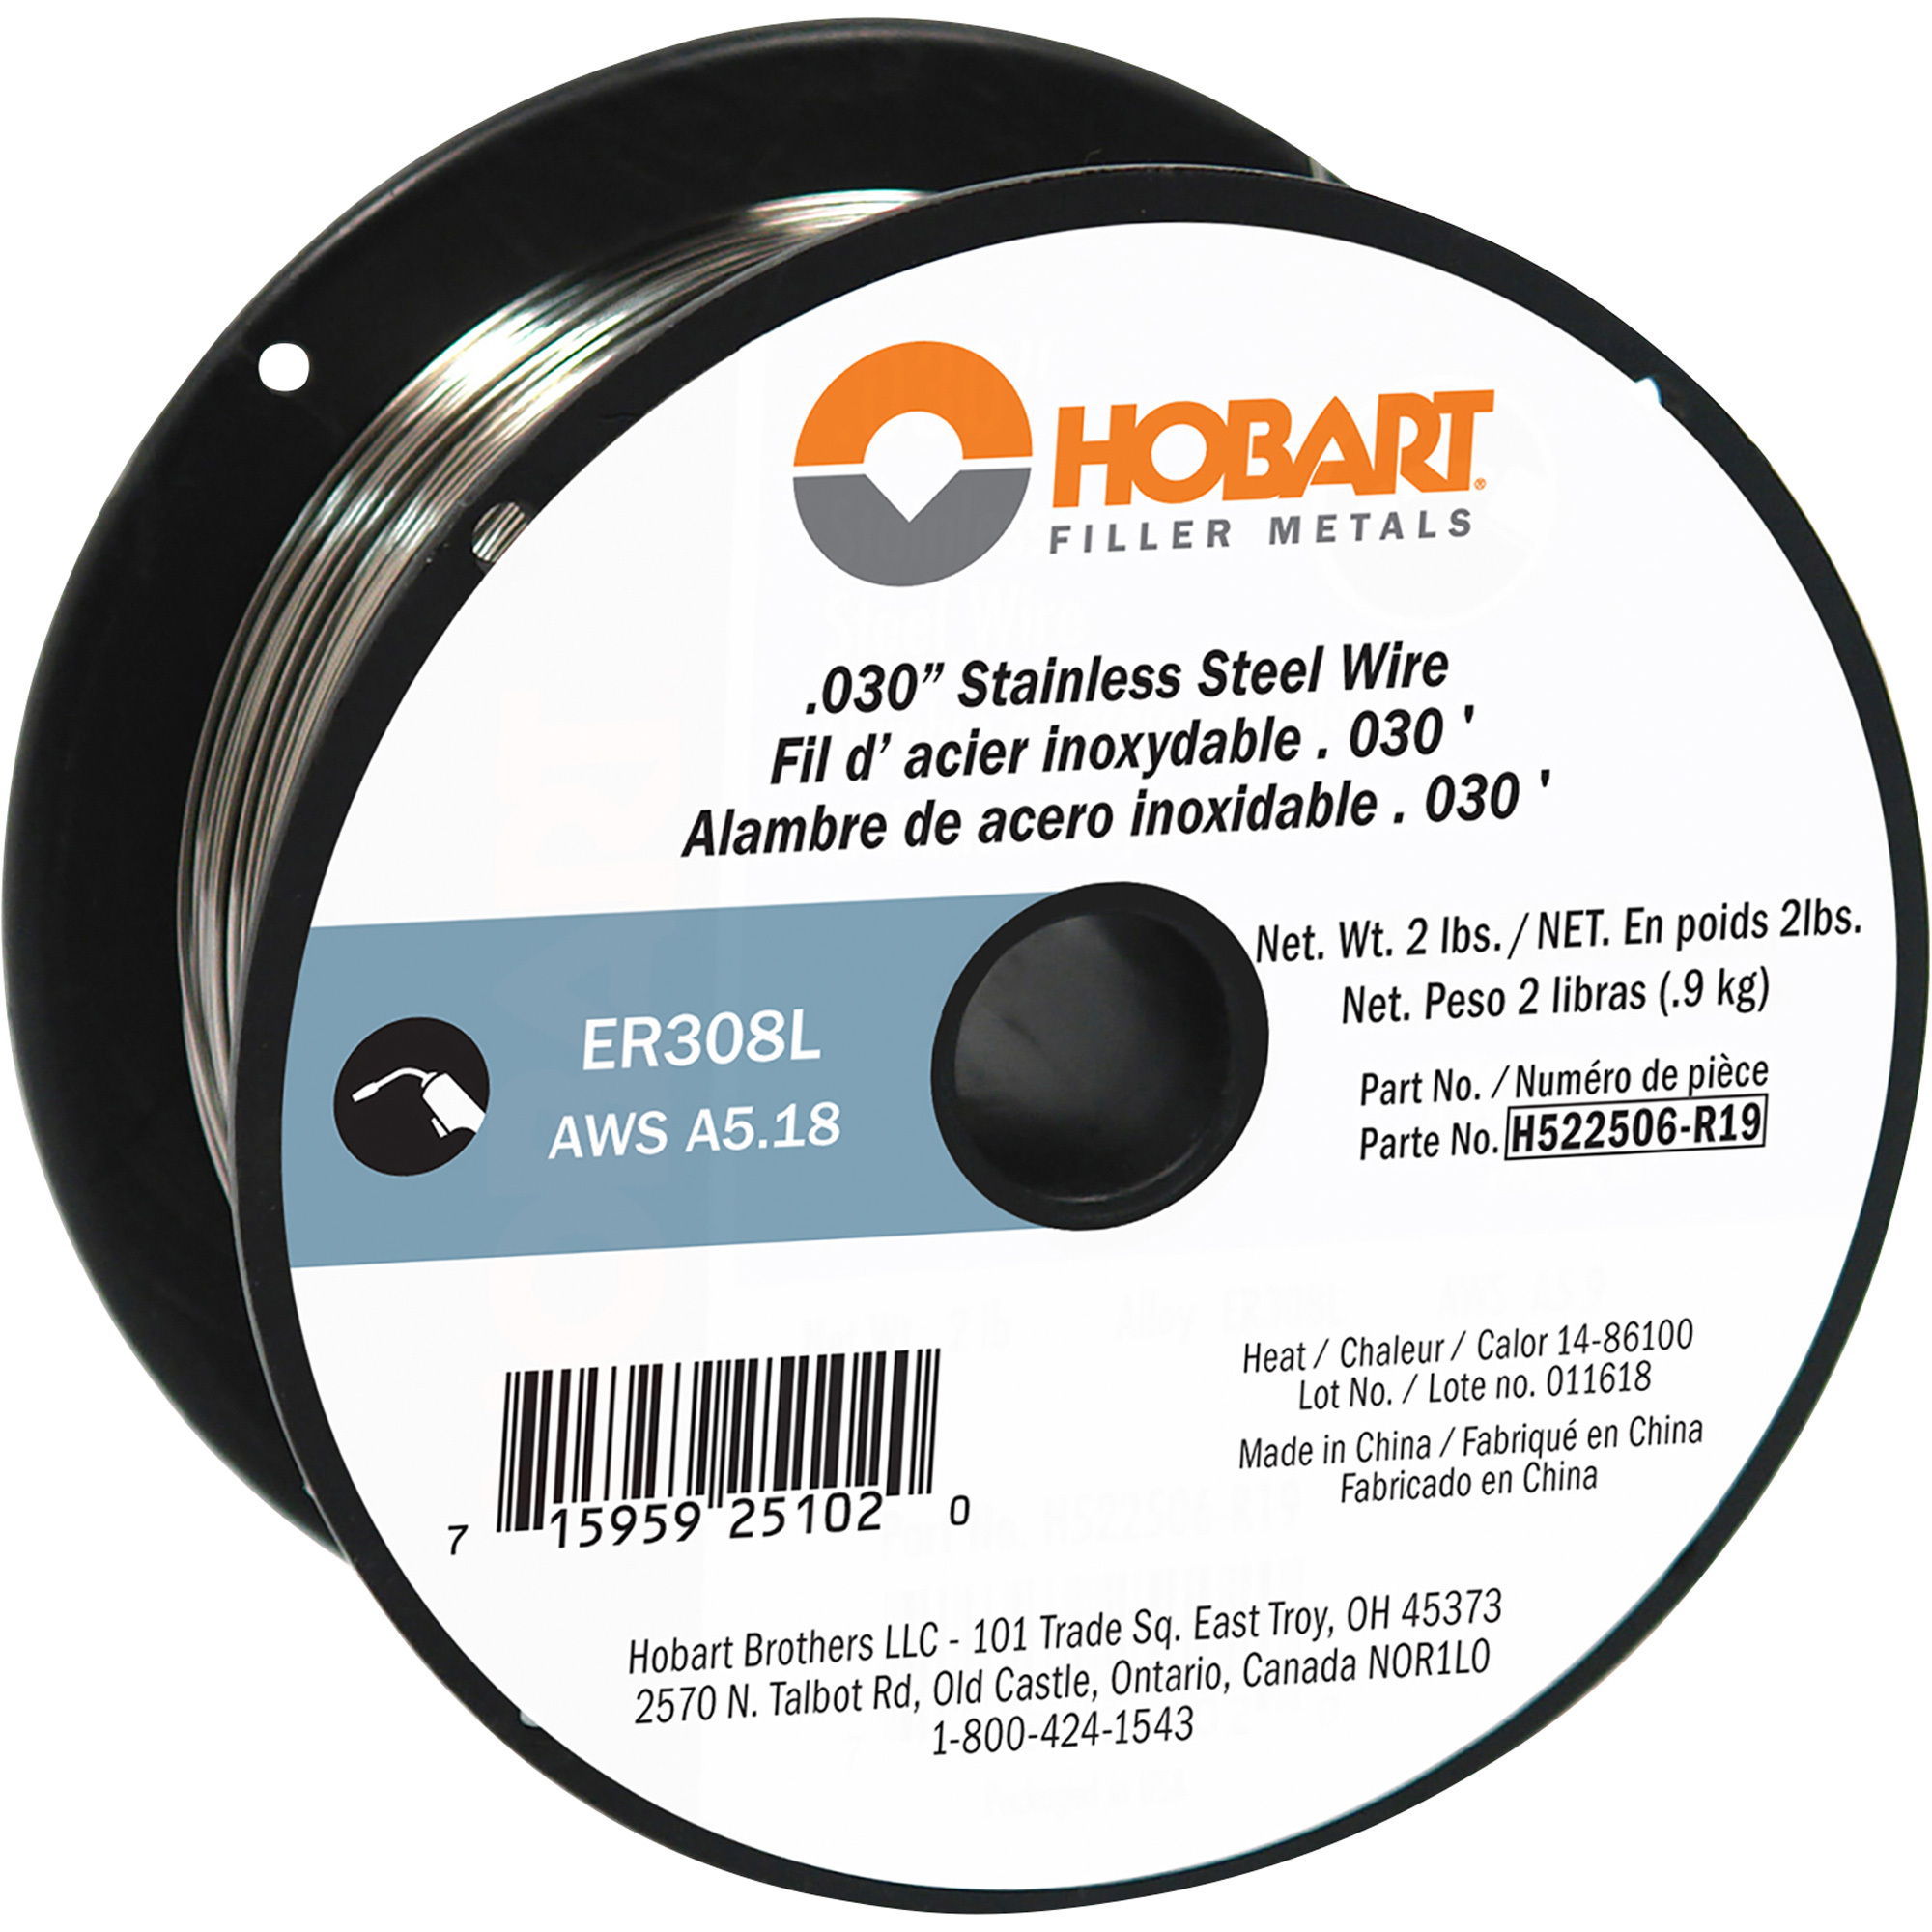 Hobart MIG Welding Wire â ER308L Stainless Steel, .030Inch, 2-Lb. Spool, Model H522506-R19